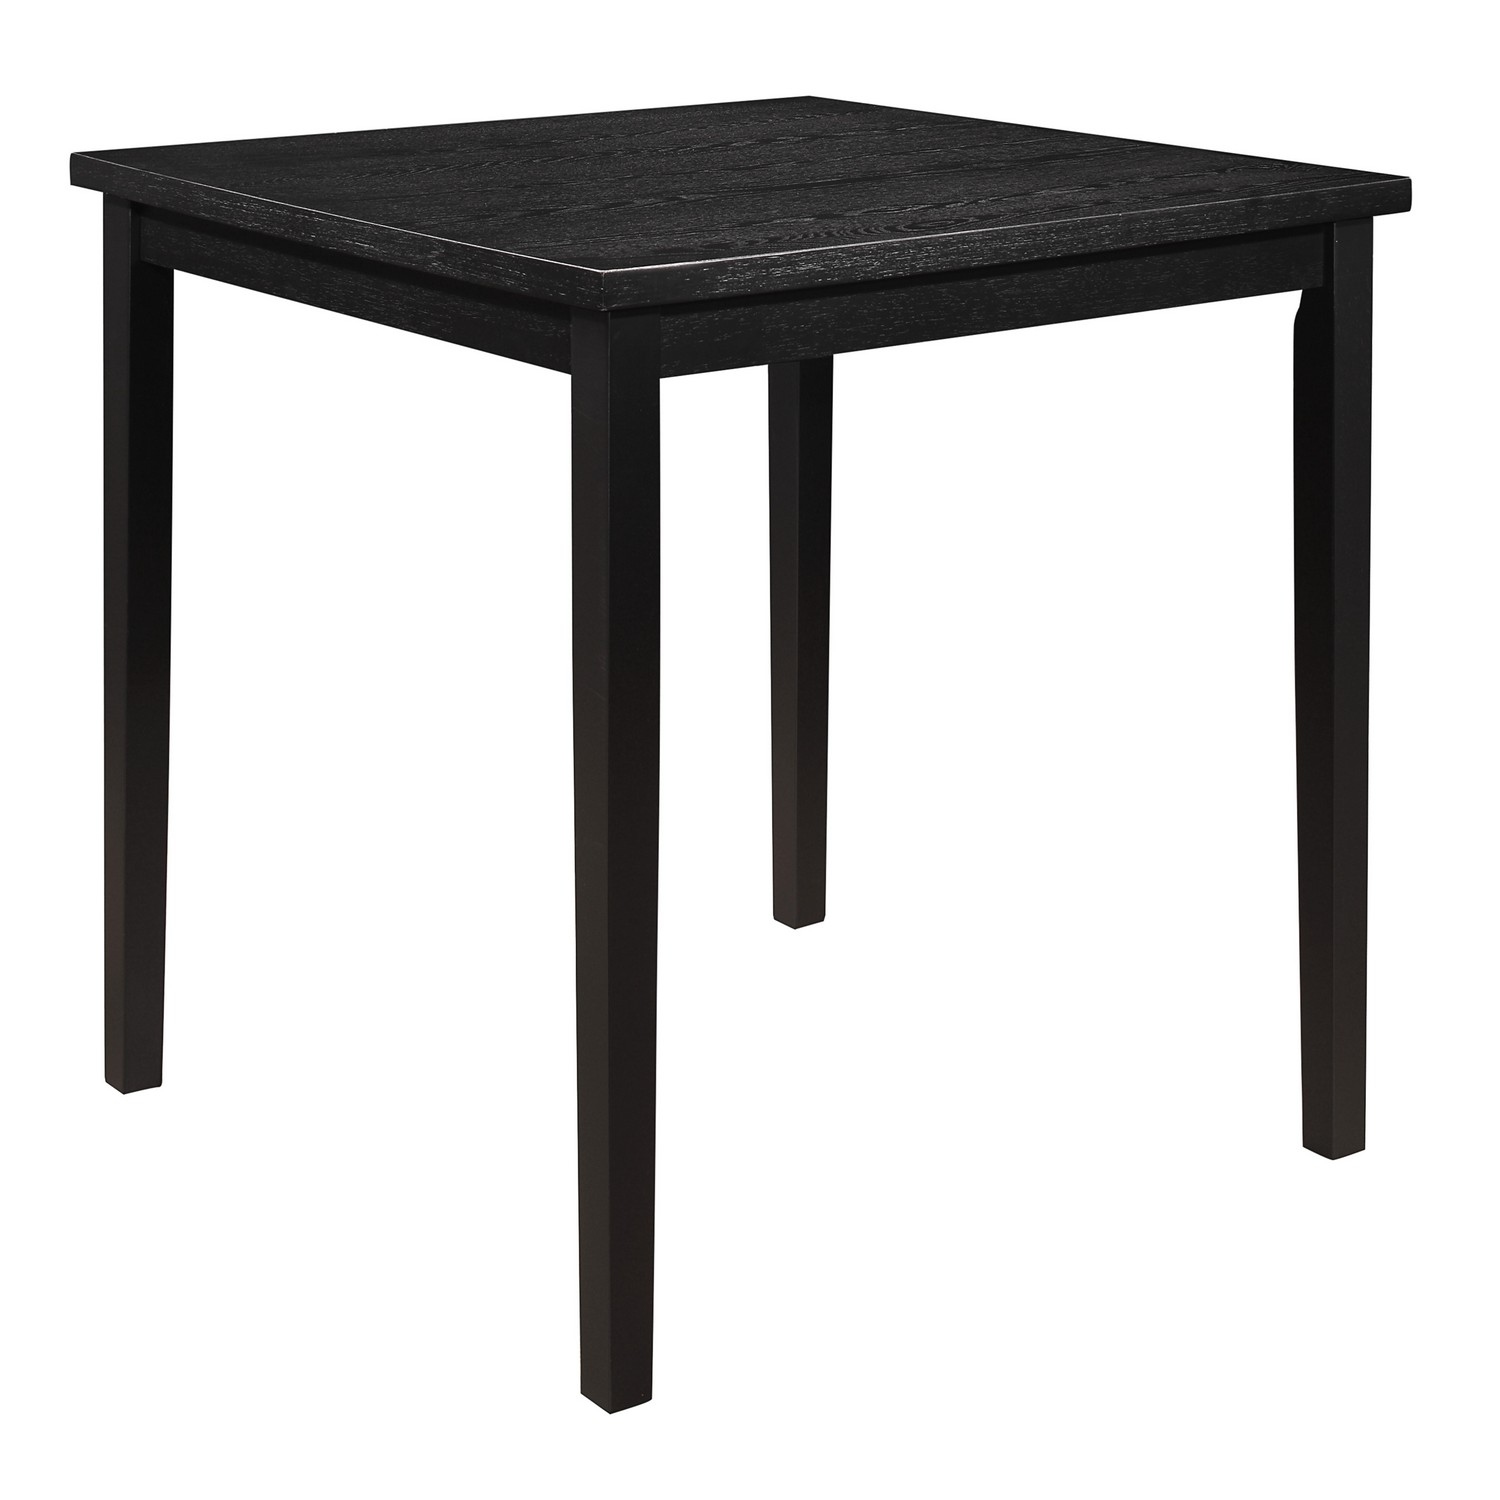 Homelegance Adina Counter Height Table - Black